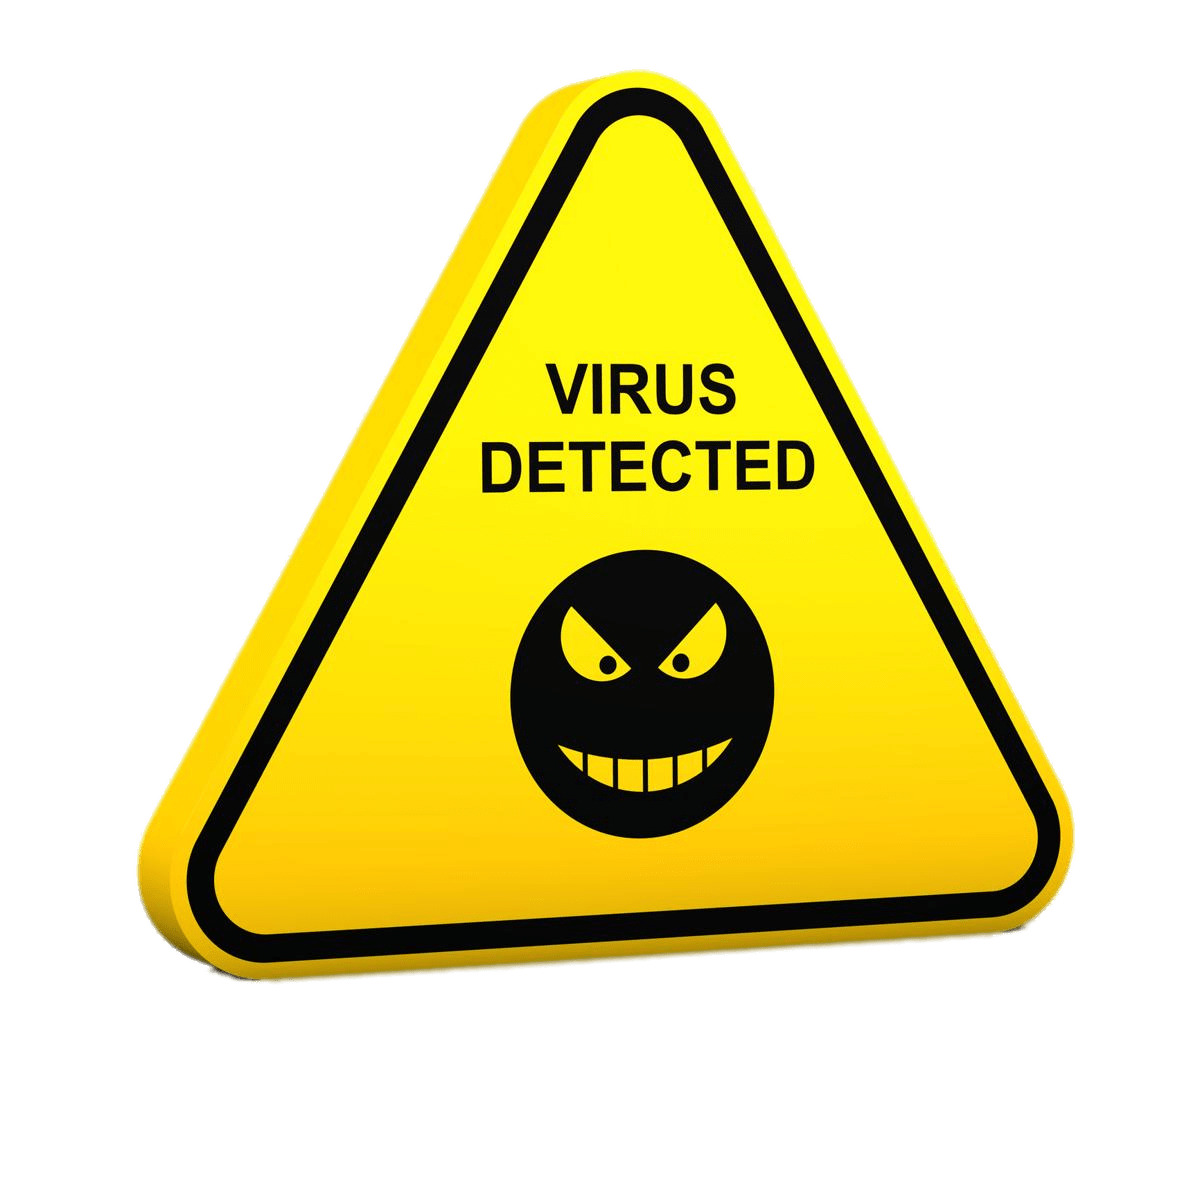 Virus Detected icons